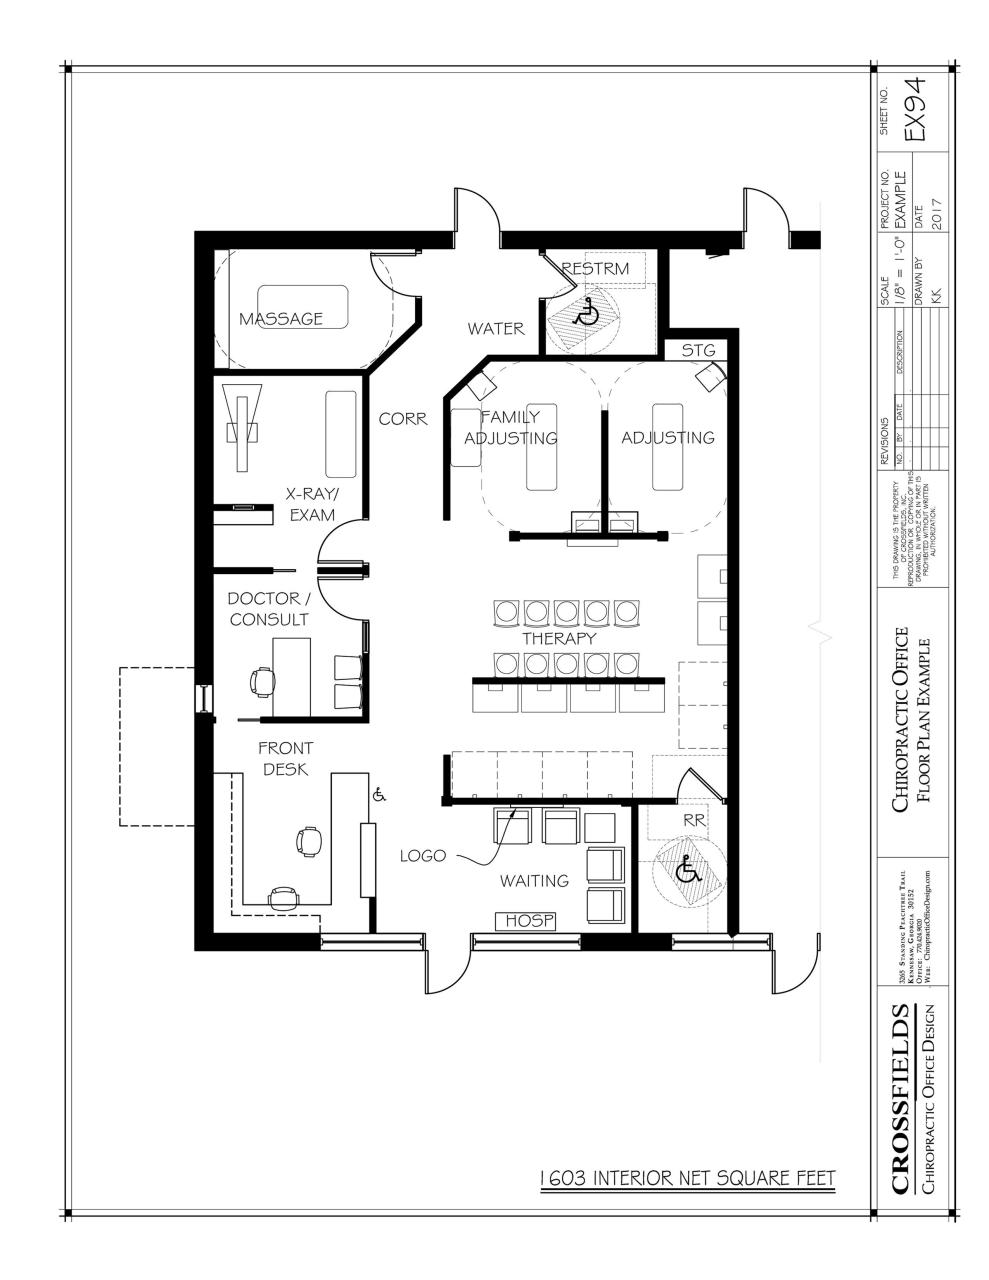 Floor Plan Sketch at Explore collection of Floor